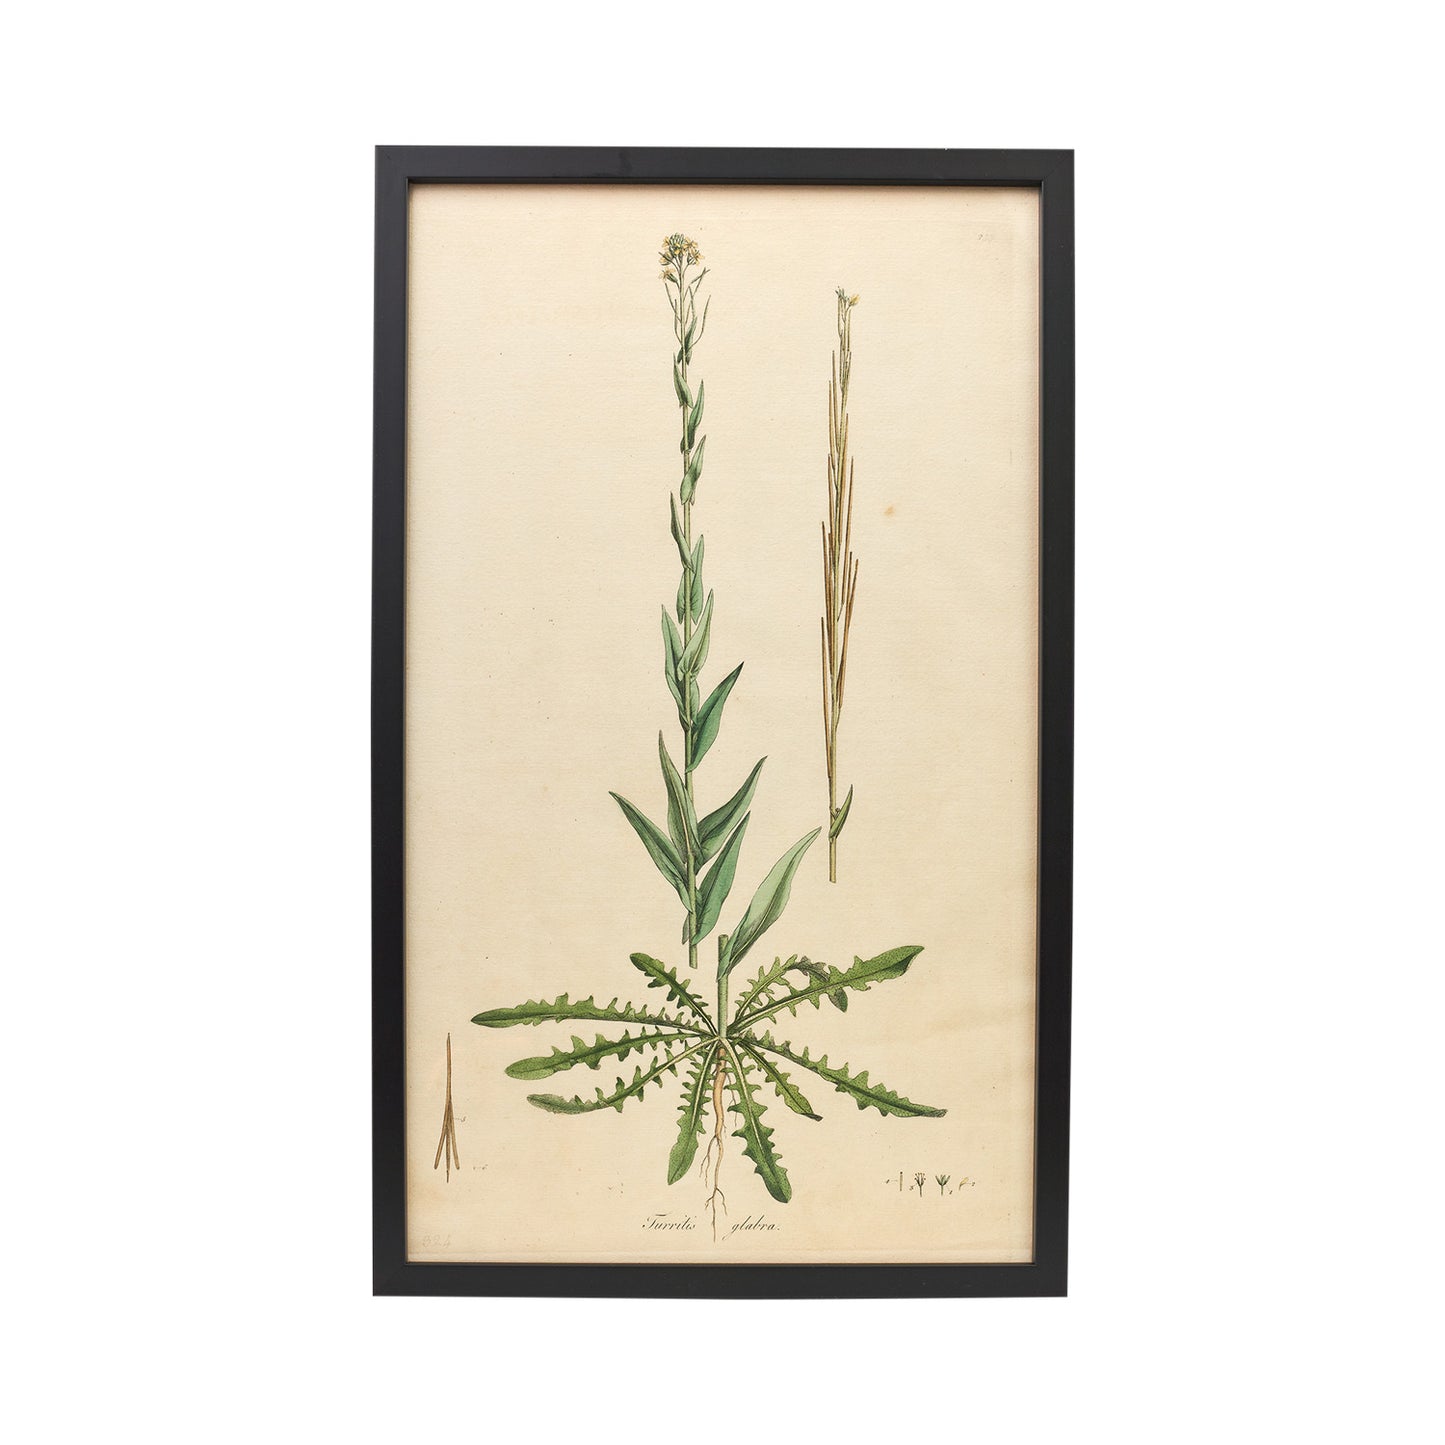 Glabra ‘Flora Londinensis’ Botanical Print - Framed